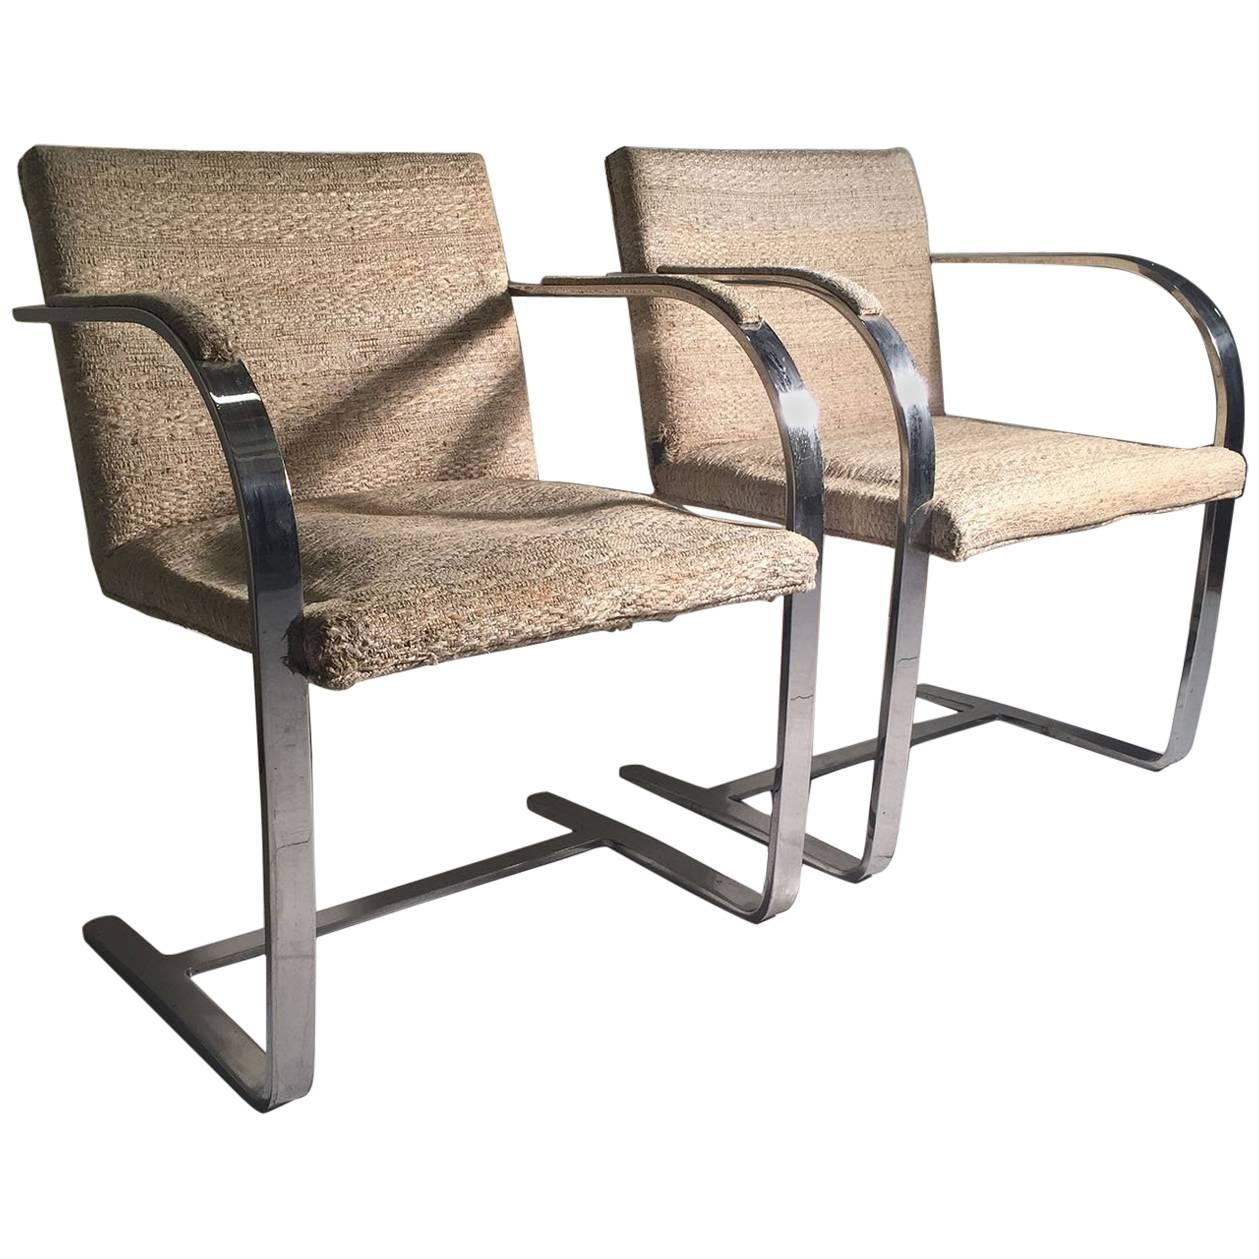 Pair of Vintage Mies van der Rohe Knoll Brno Chairs / FLAT BAR